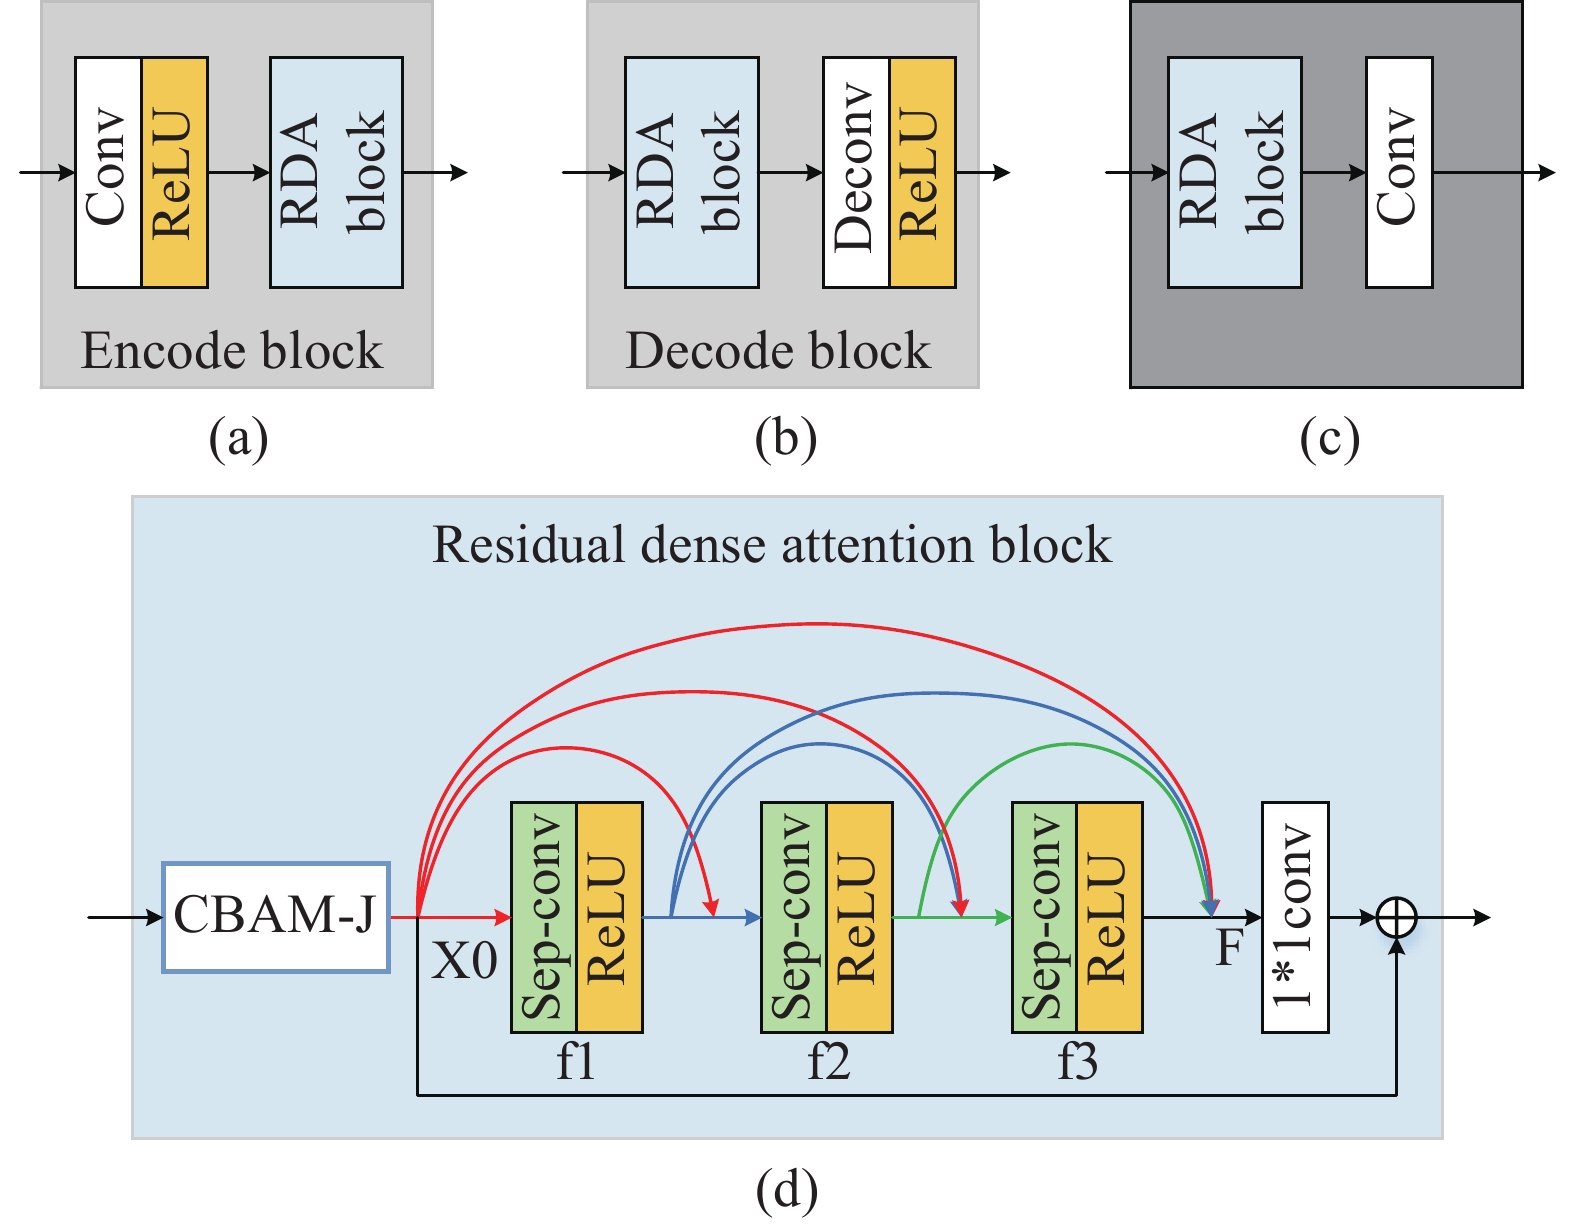 Encode，decode block. (a) Encode block; (b) Decode block; (c) End decode block; (d) Residual dense attention block